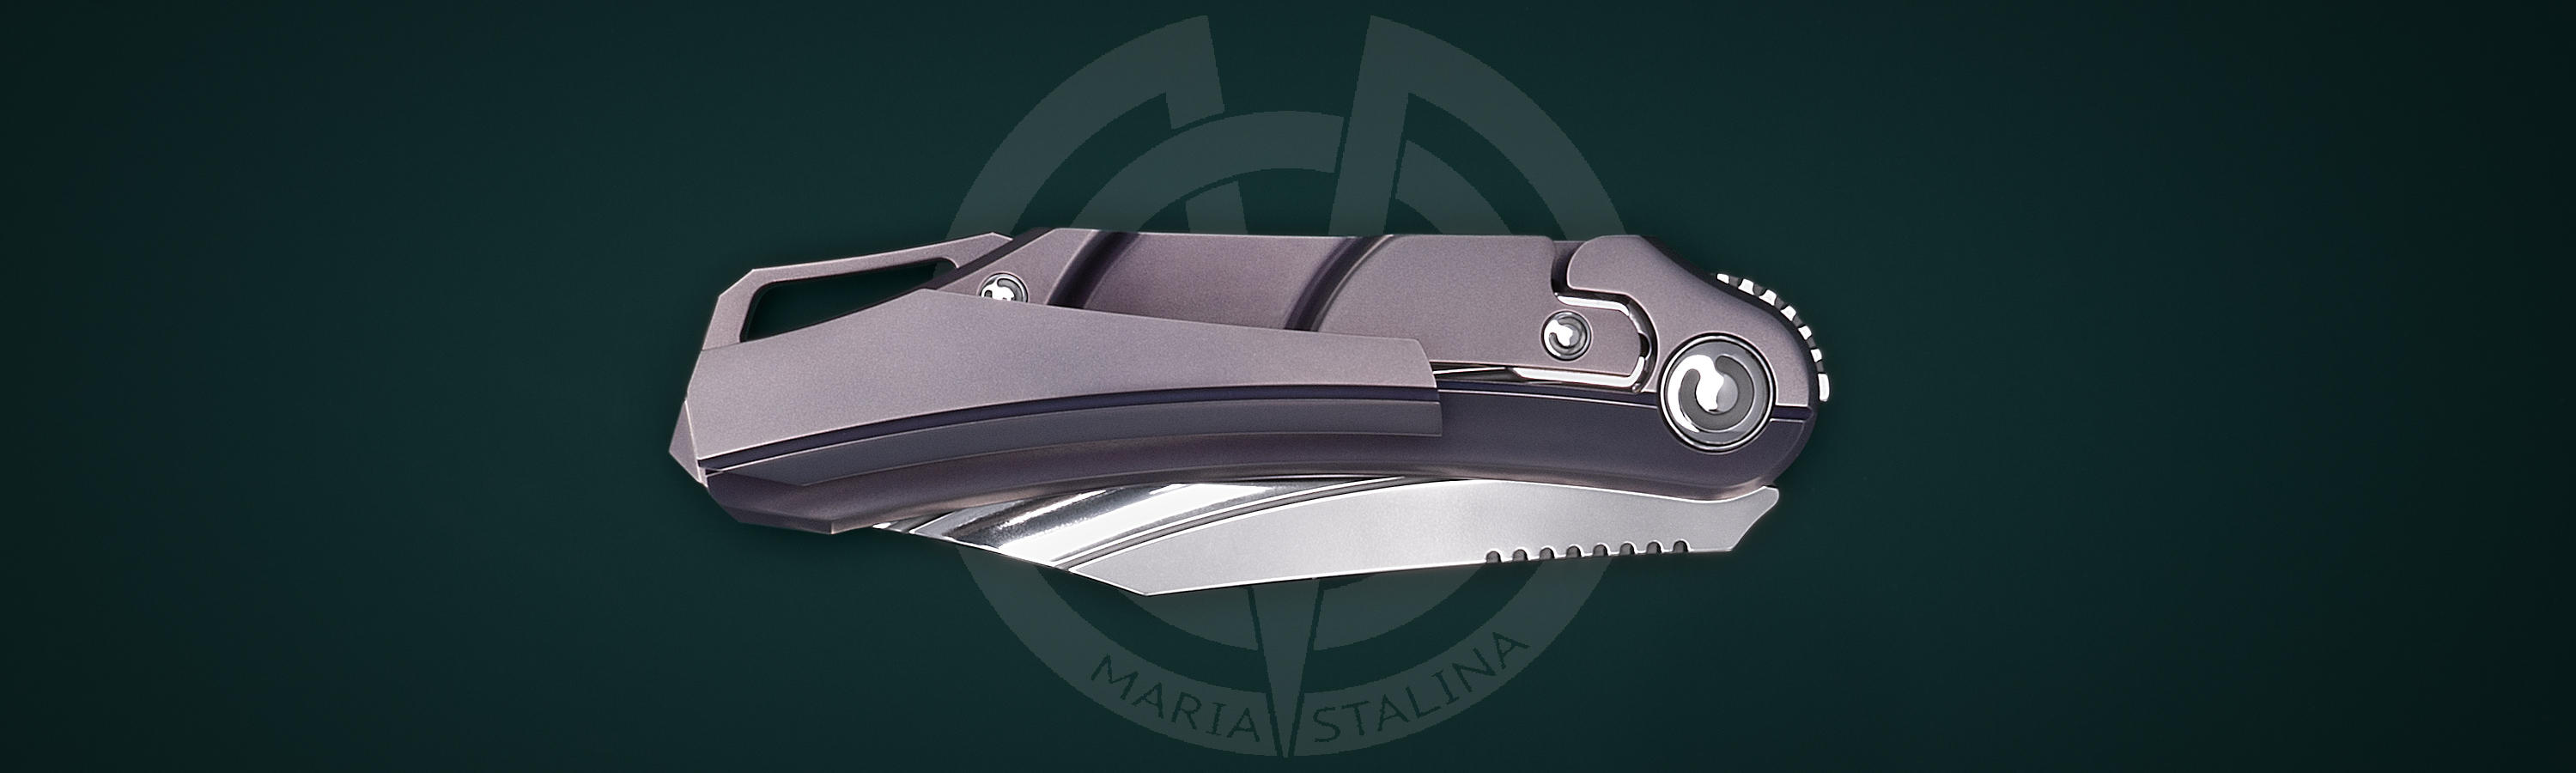 Дизайн ножа навеян классическими коанами дзен